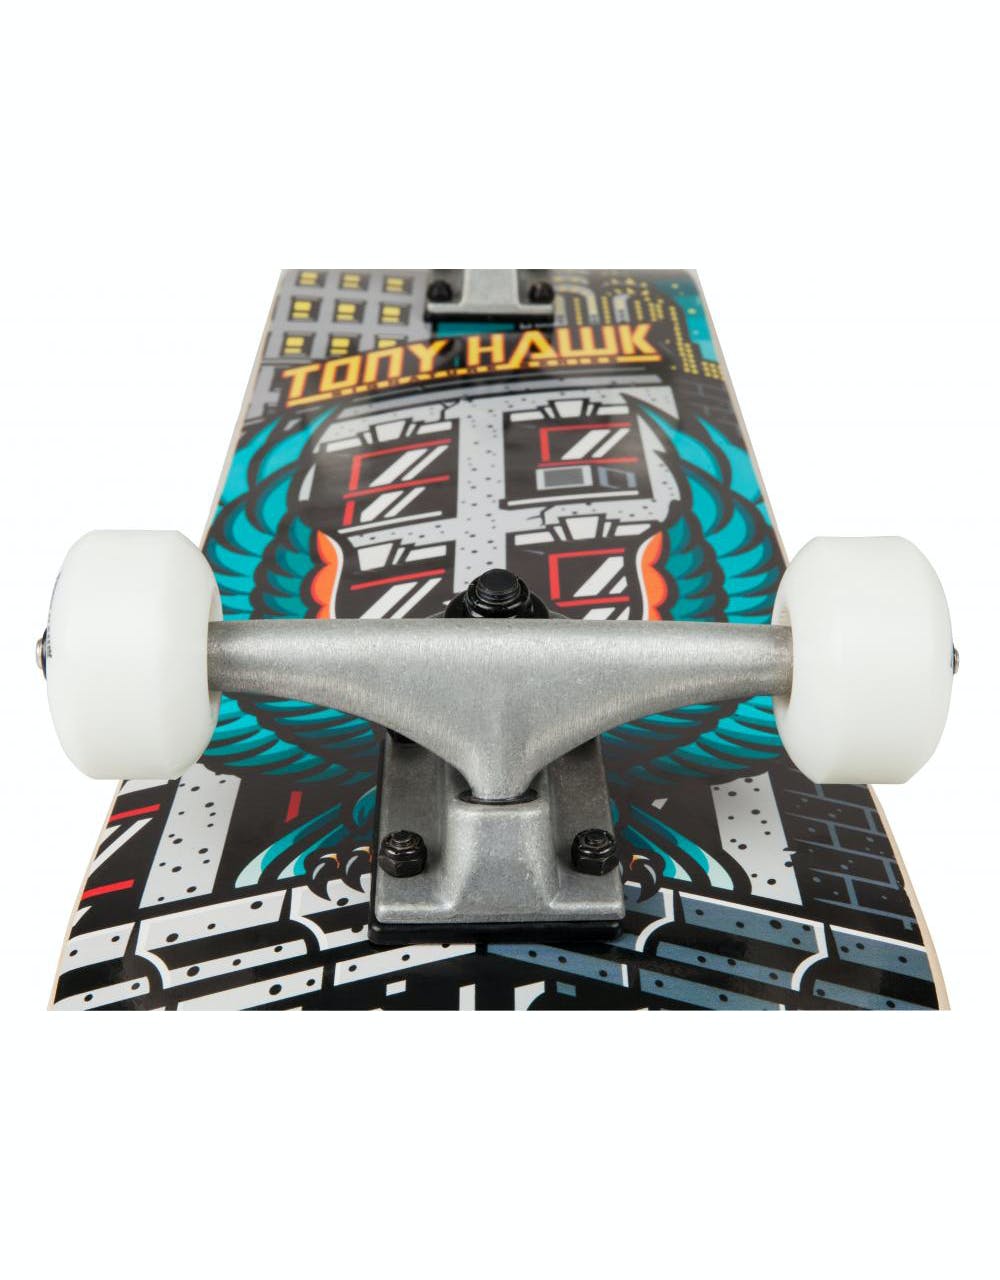 Tony Hawk 180 Downtown Mini Complete Skateboard - 7.375"